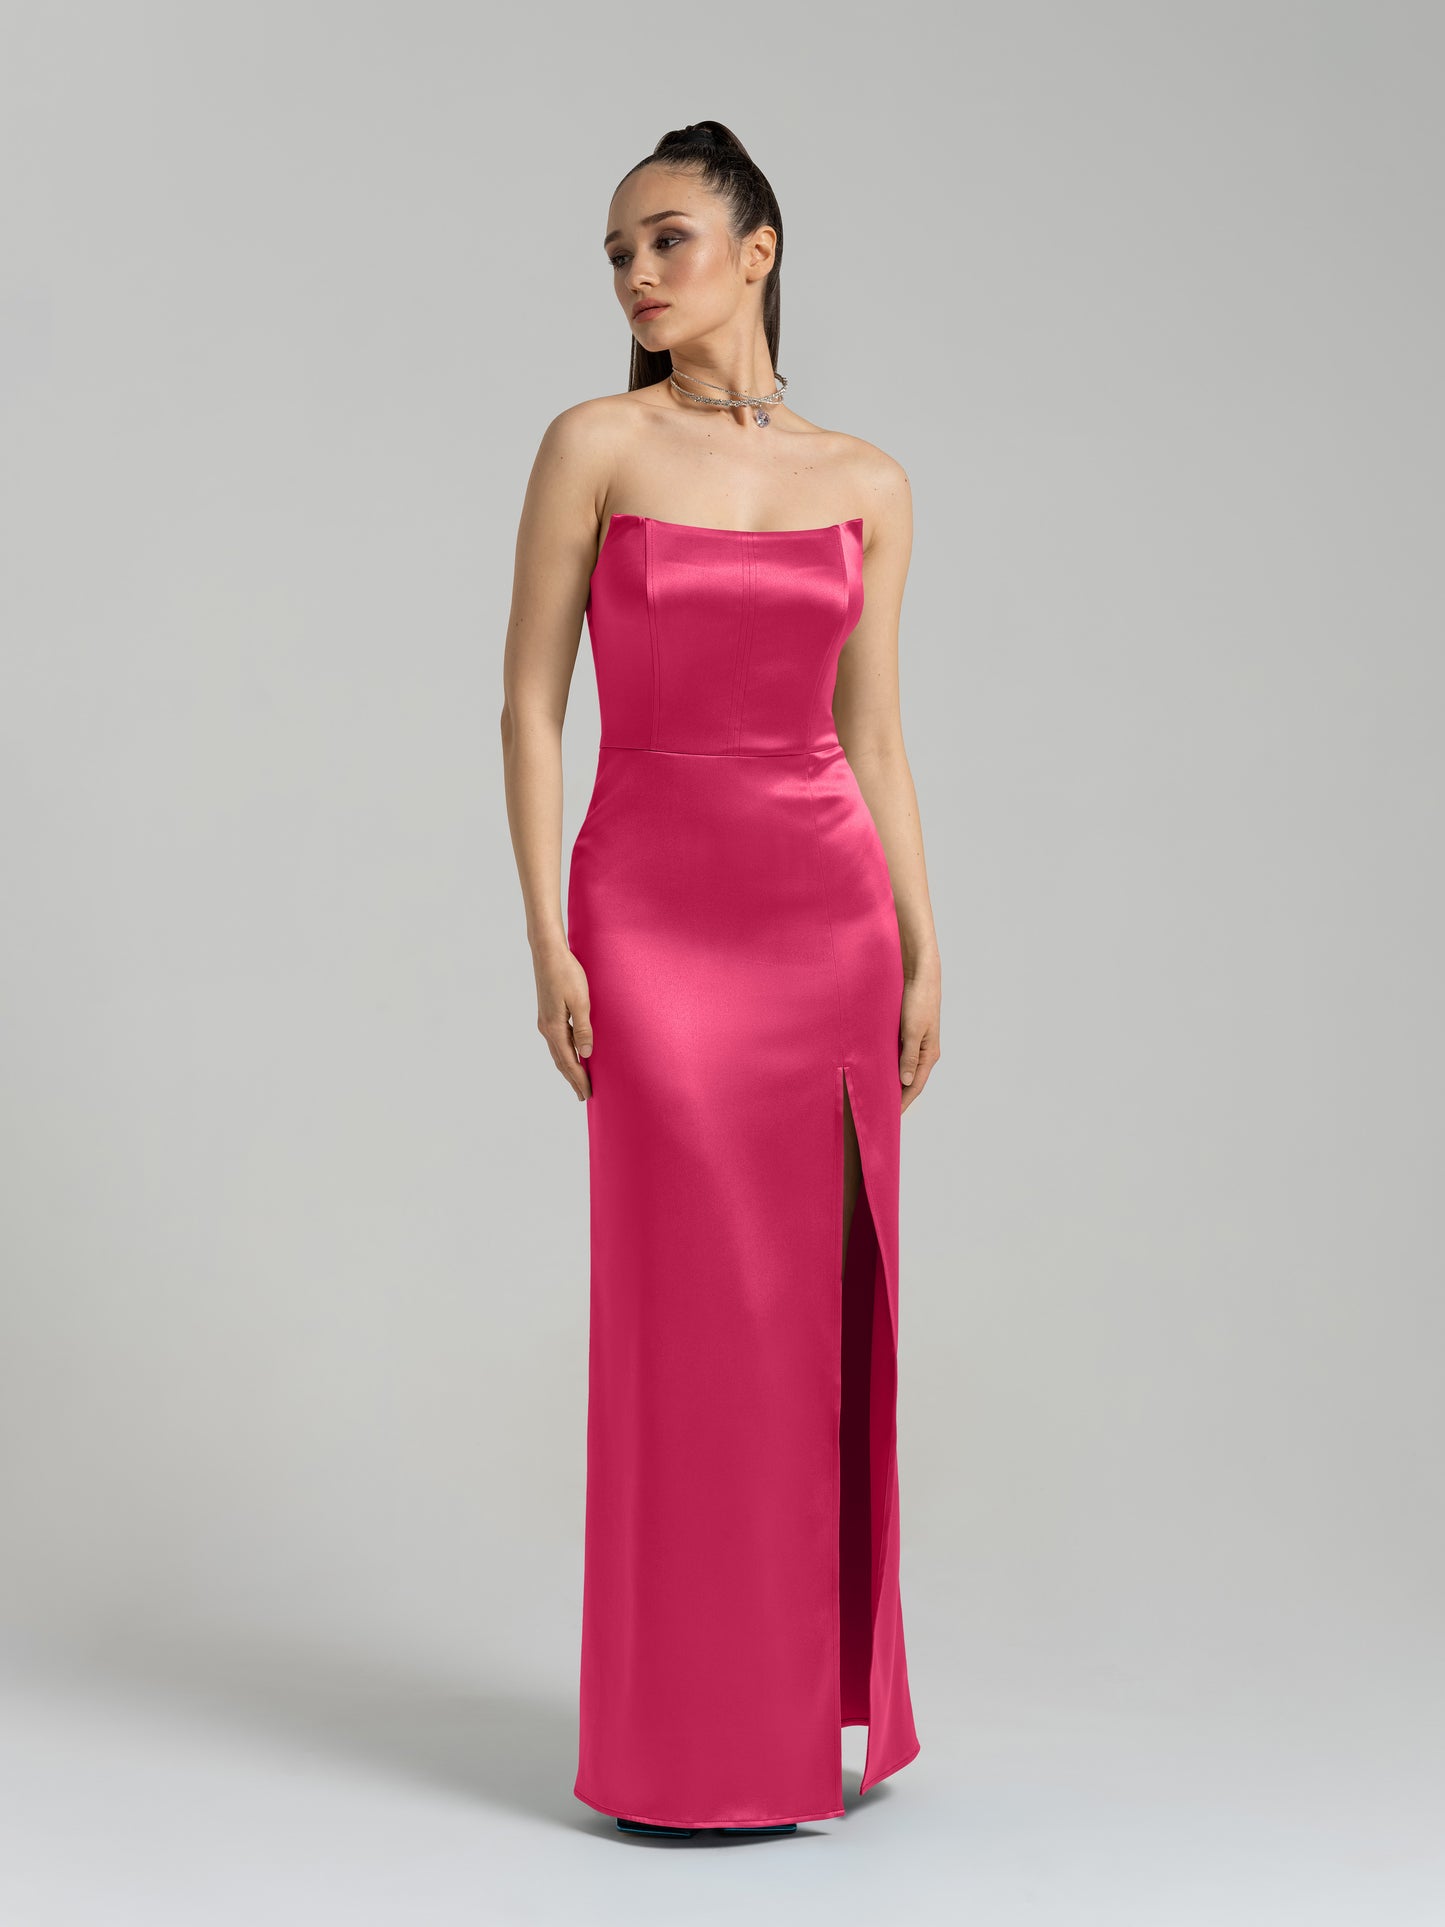 Queen of Hearts Satin Maxi Dress - Hot Pink